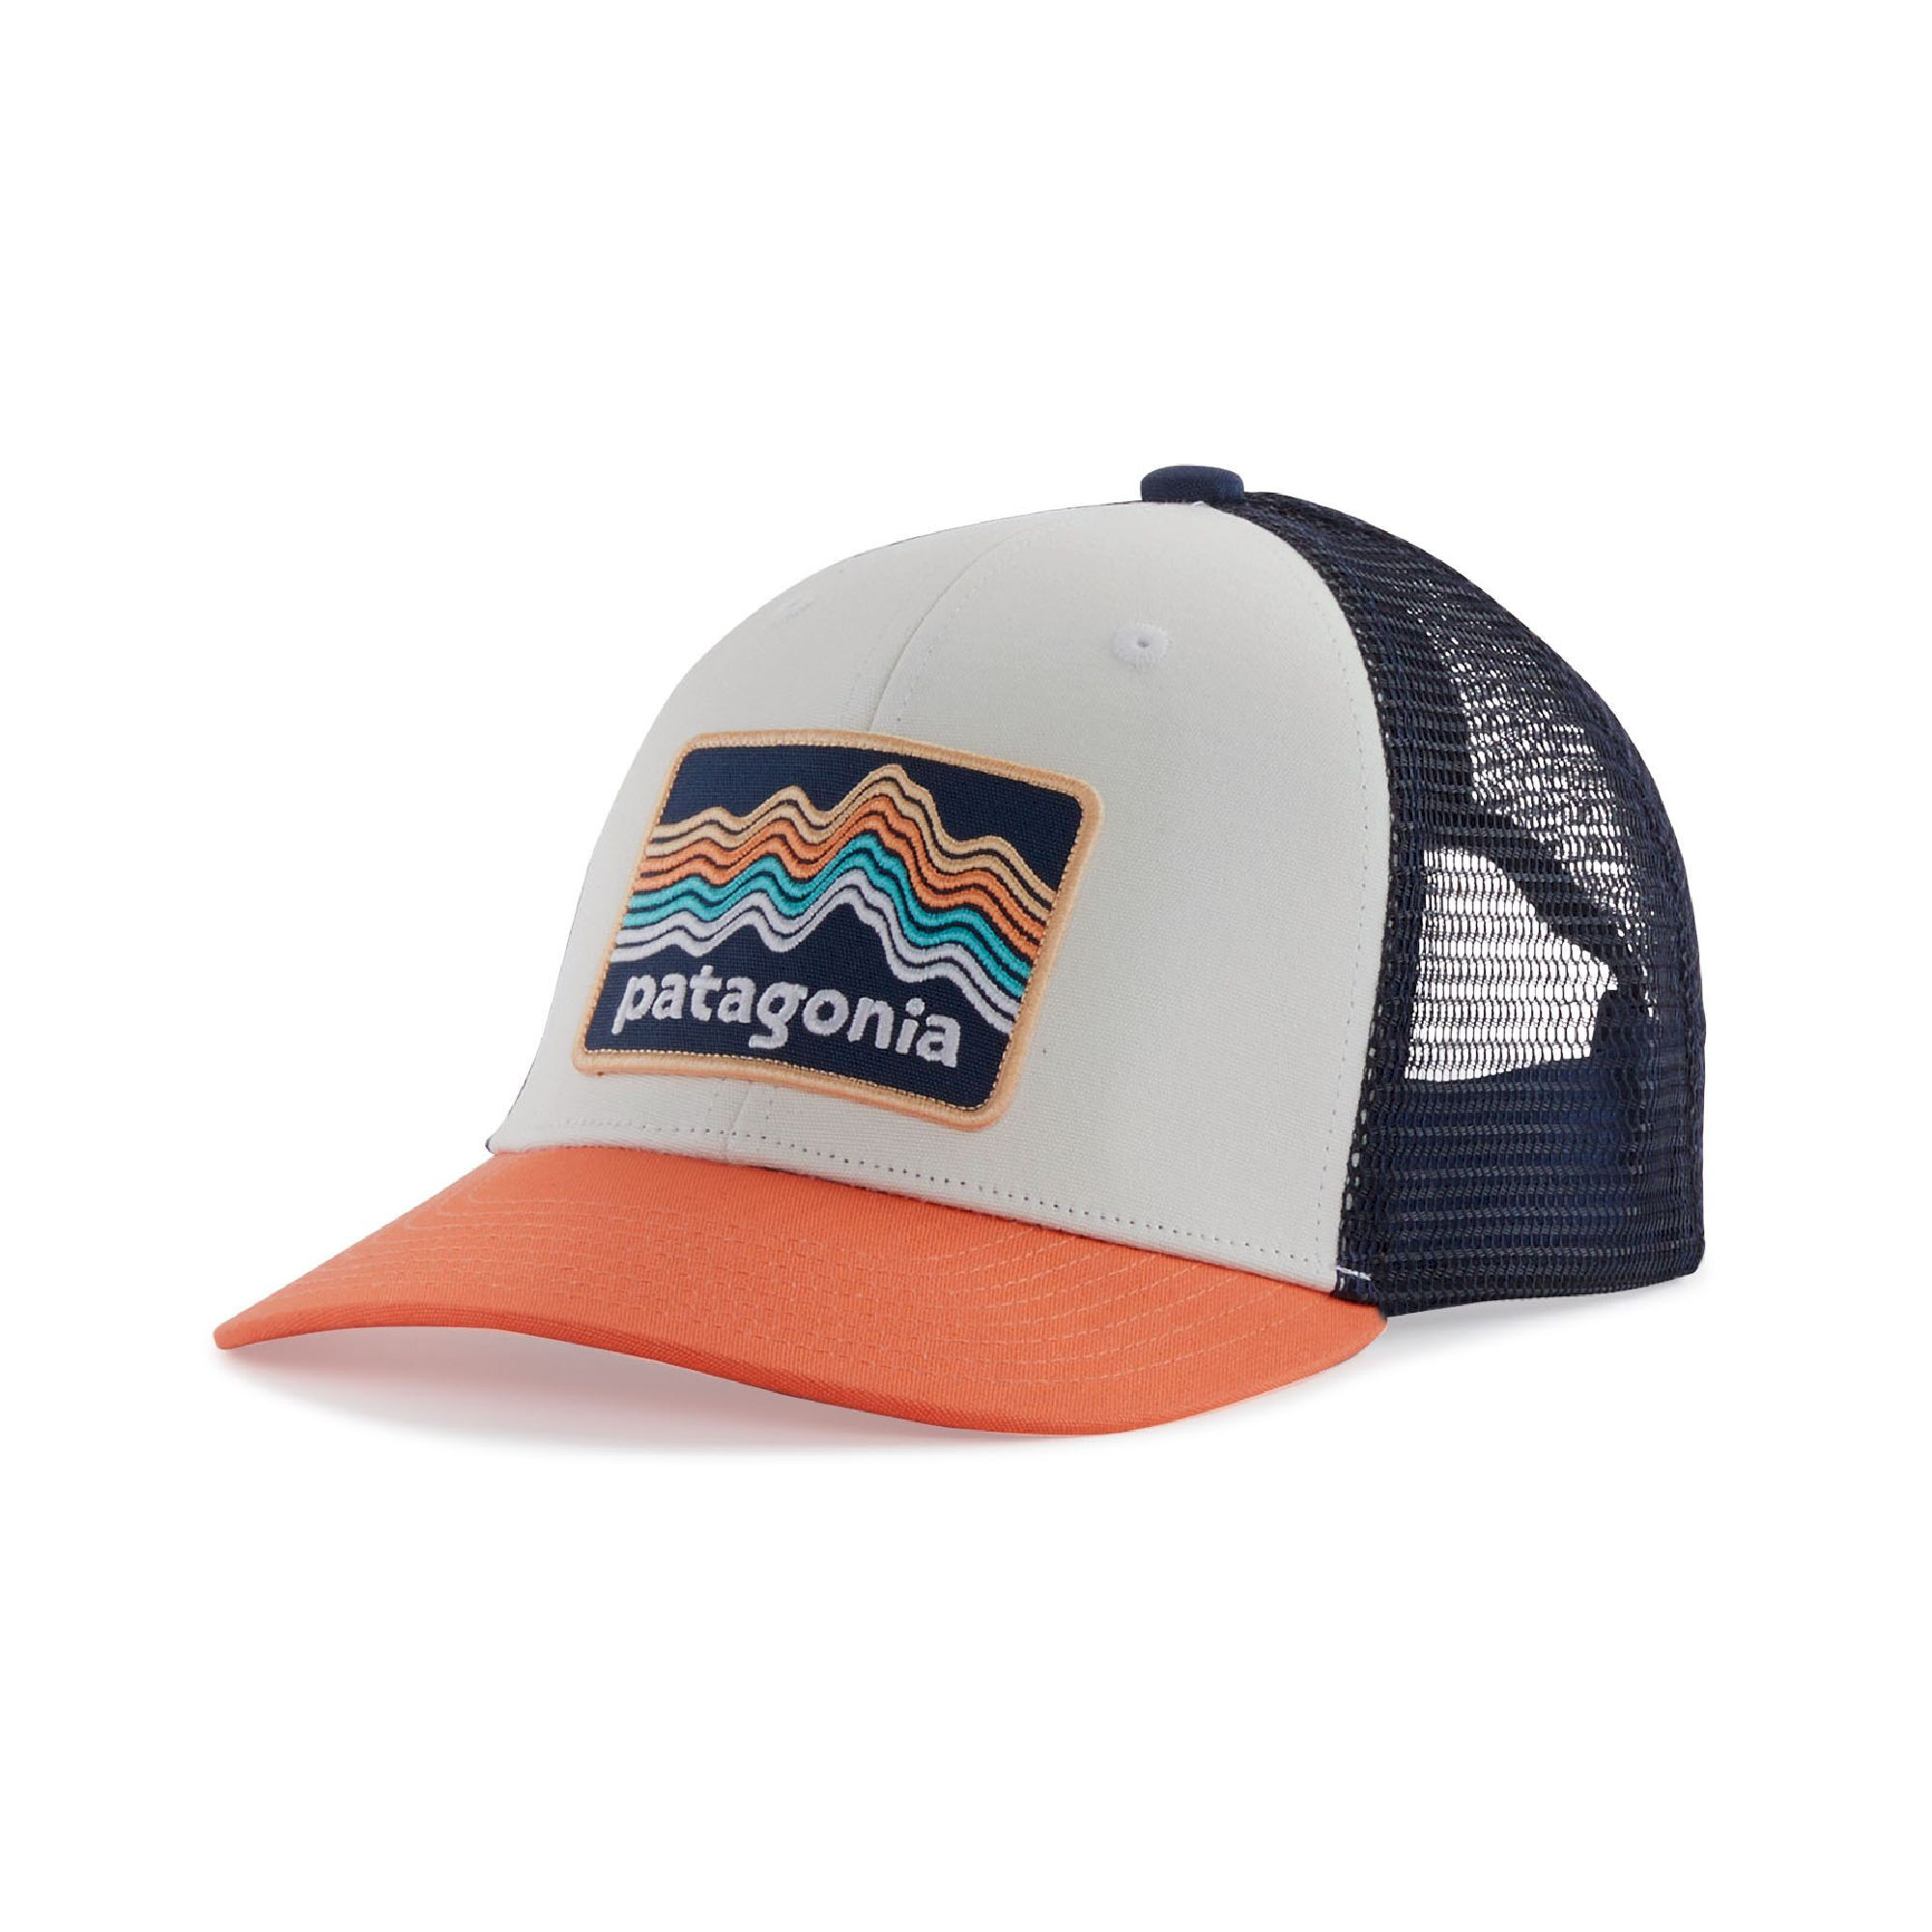 Patagonia K's Trucker Hat - Pet